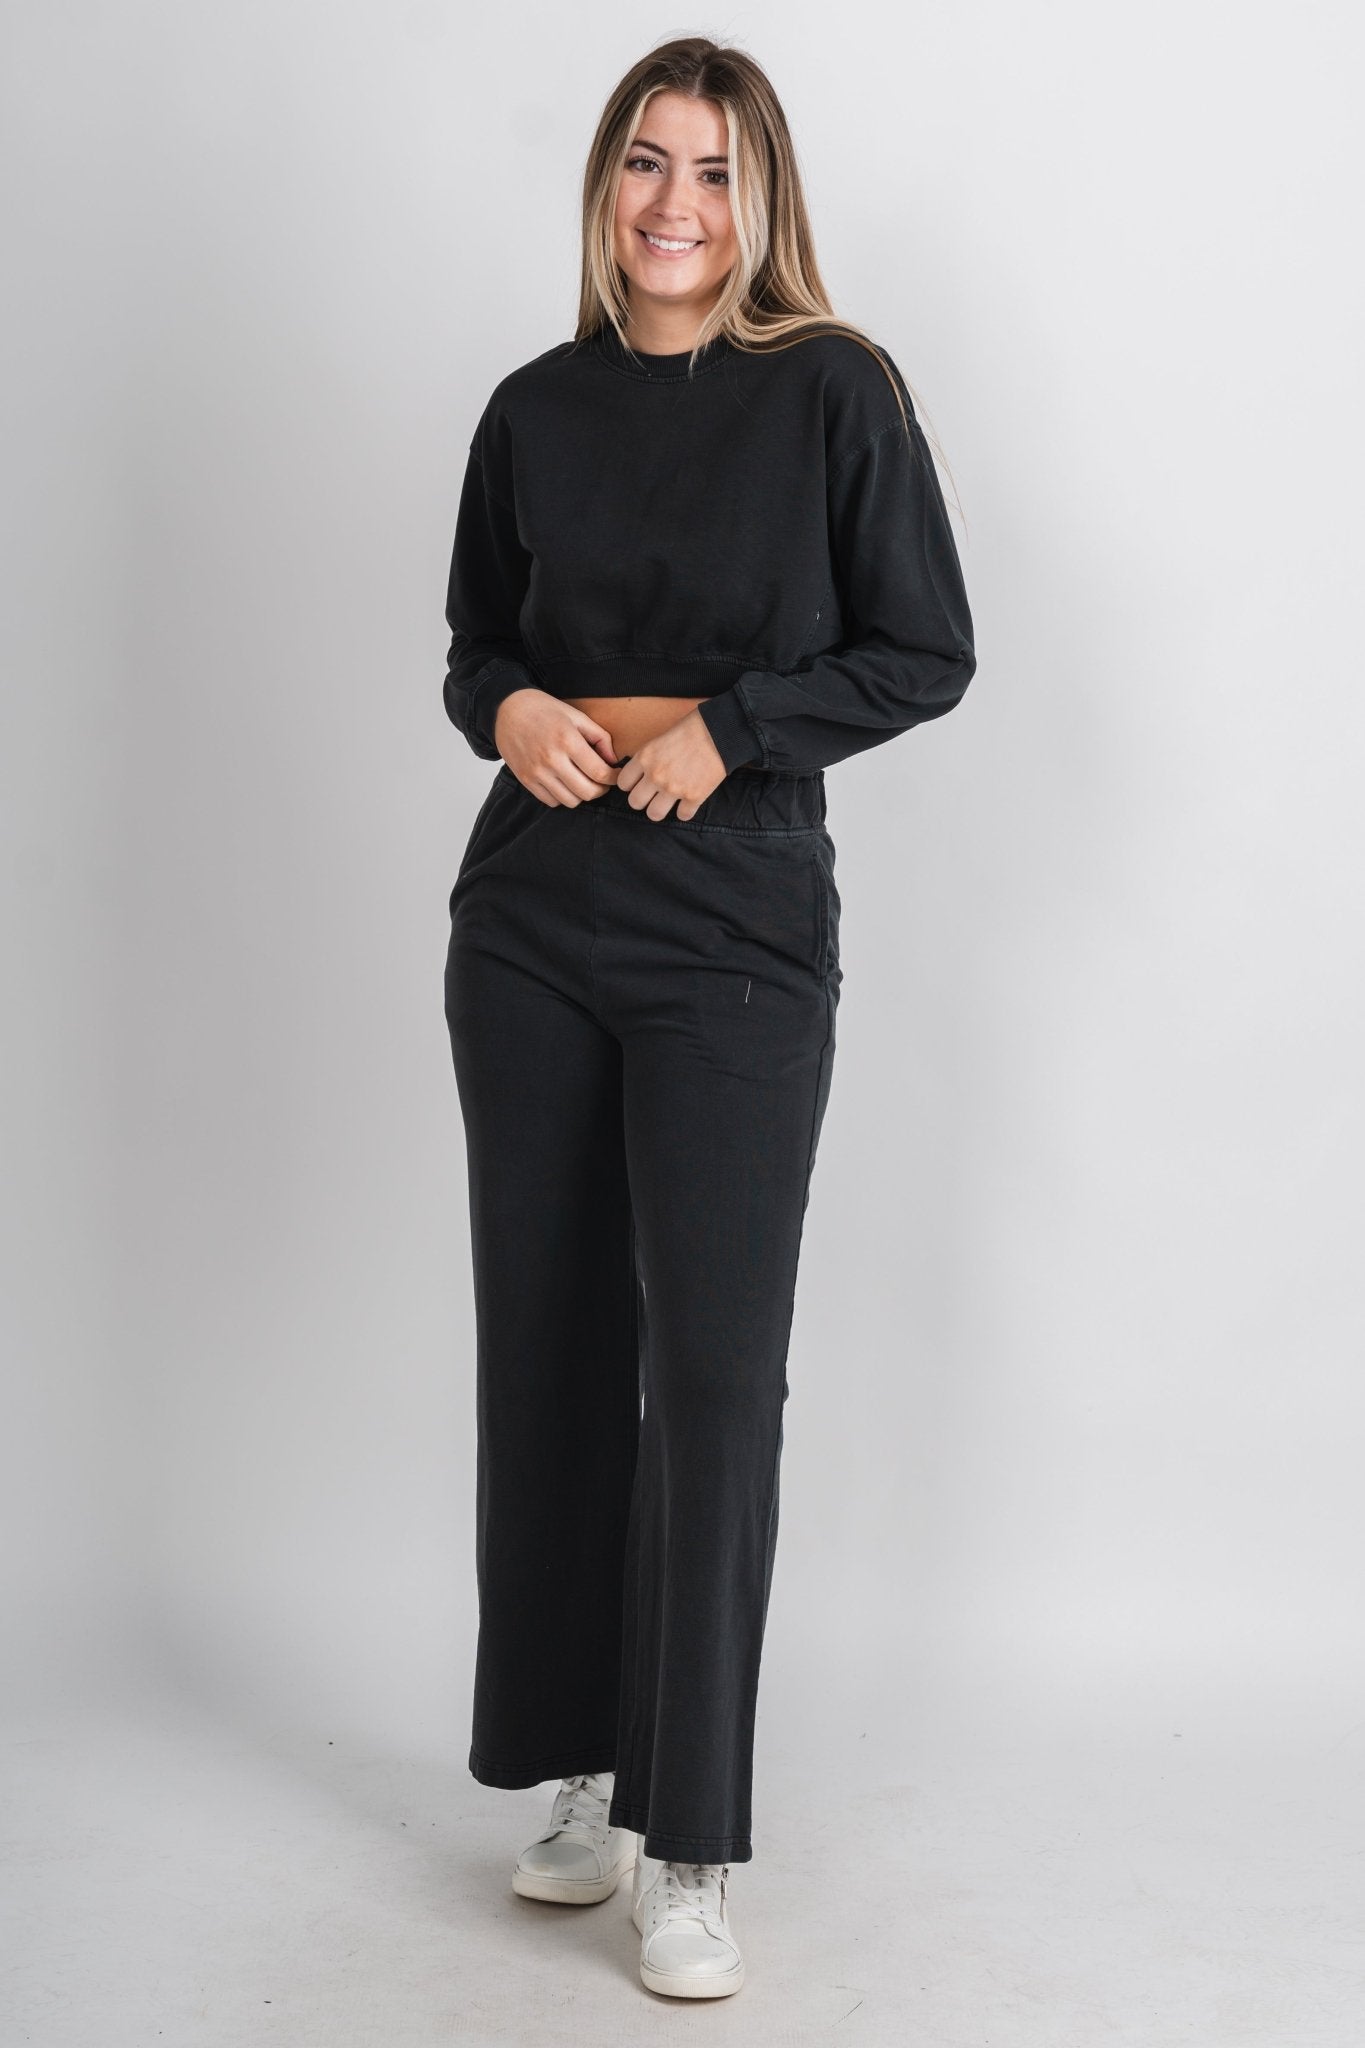 Mineral sweatpants black - Stylish Pants - Trendy Lounge Sets at Lush Fashion Lounge Boutique in Oklahoma City